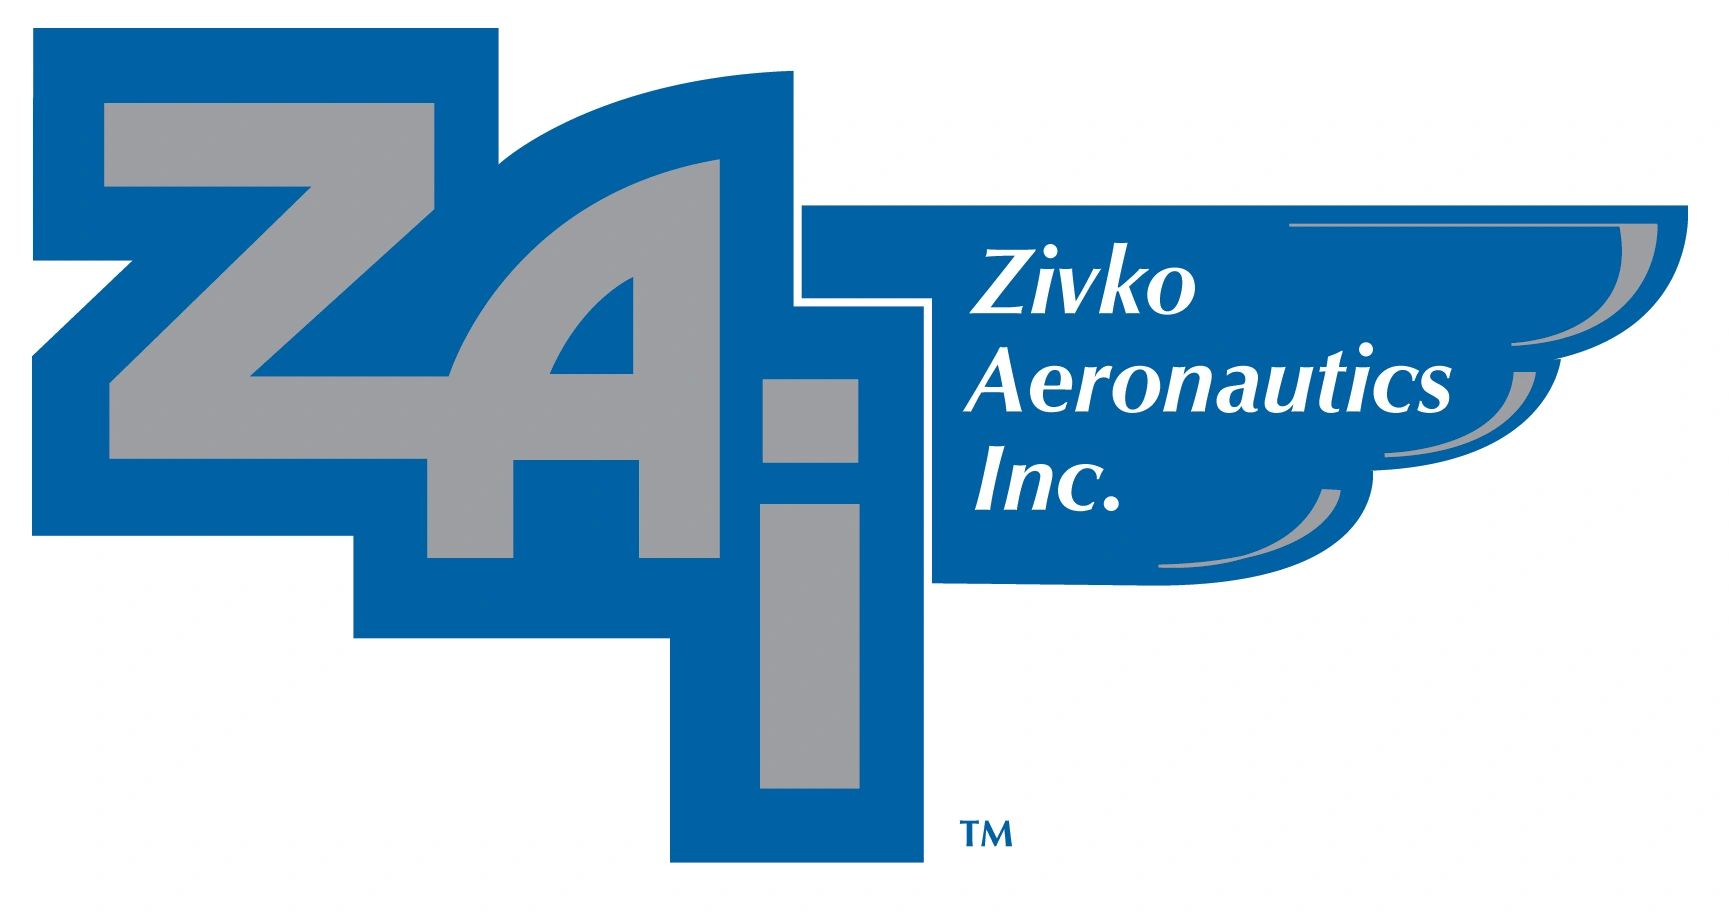 Zivko Aeronautics, Inc. logo